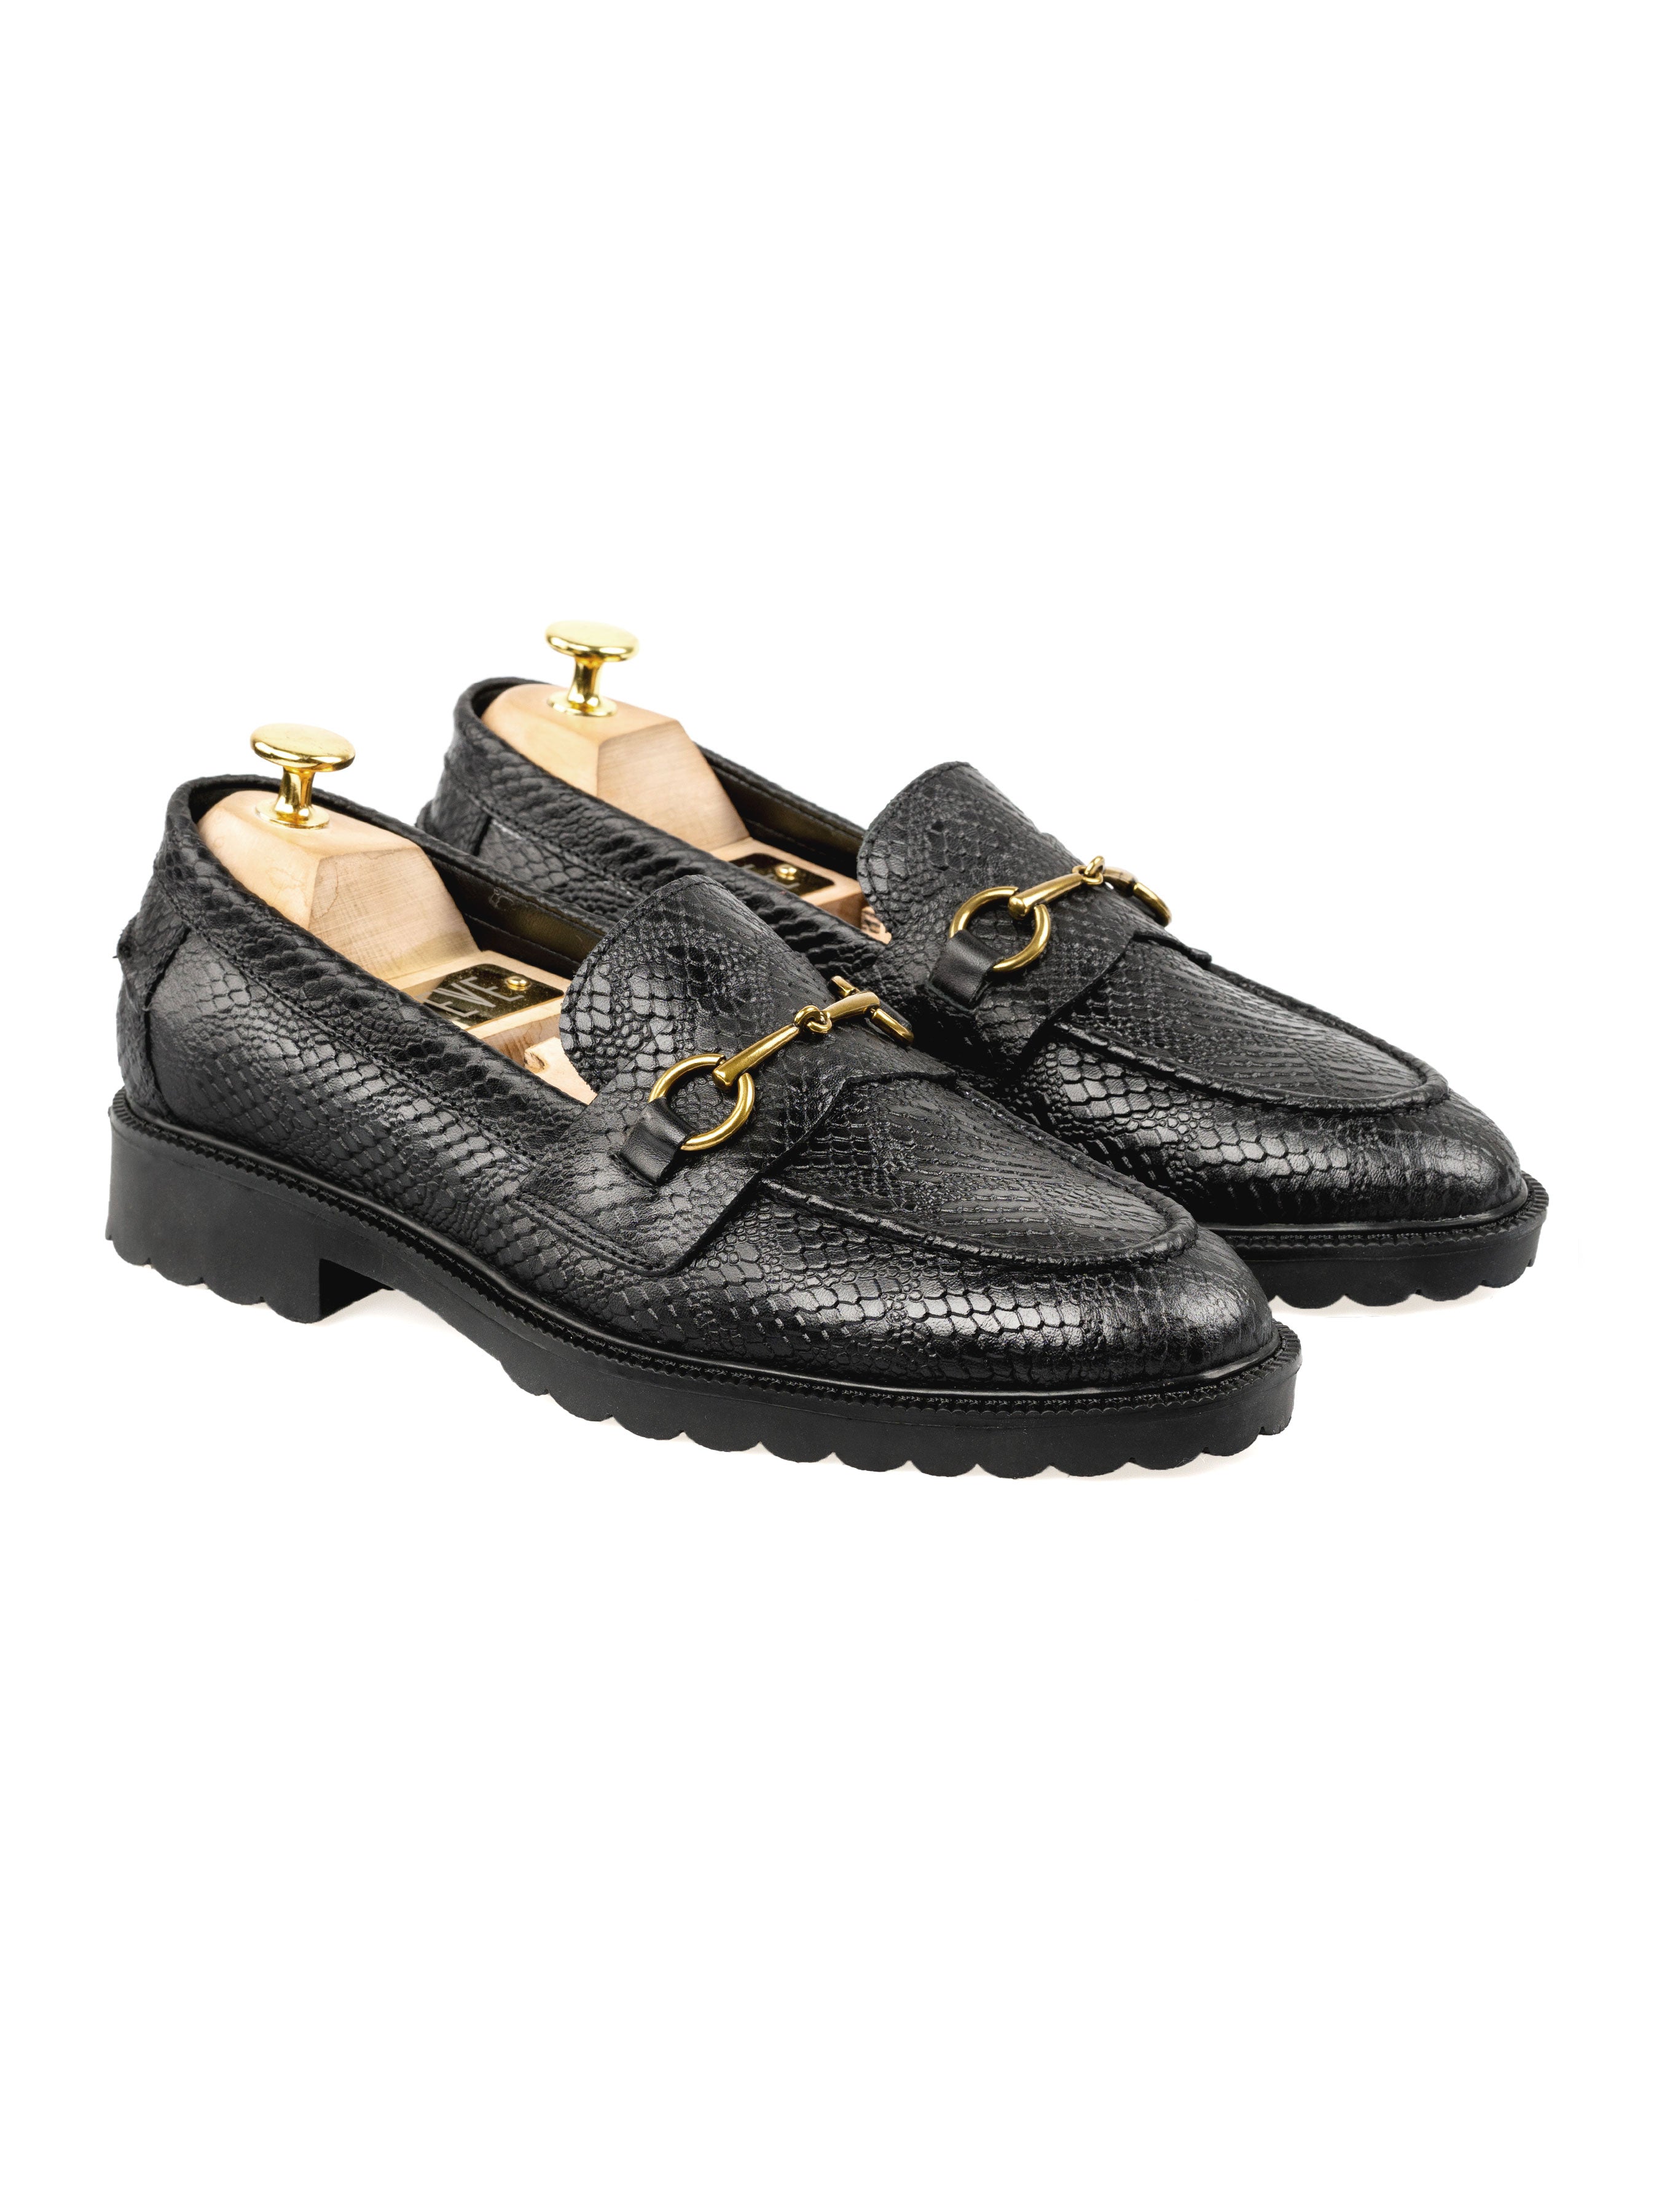 Penny Loafer Horsebit Buckle - Black Phyton Leather (Combat Sole) - Zeve Shoes